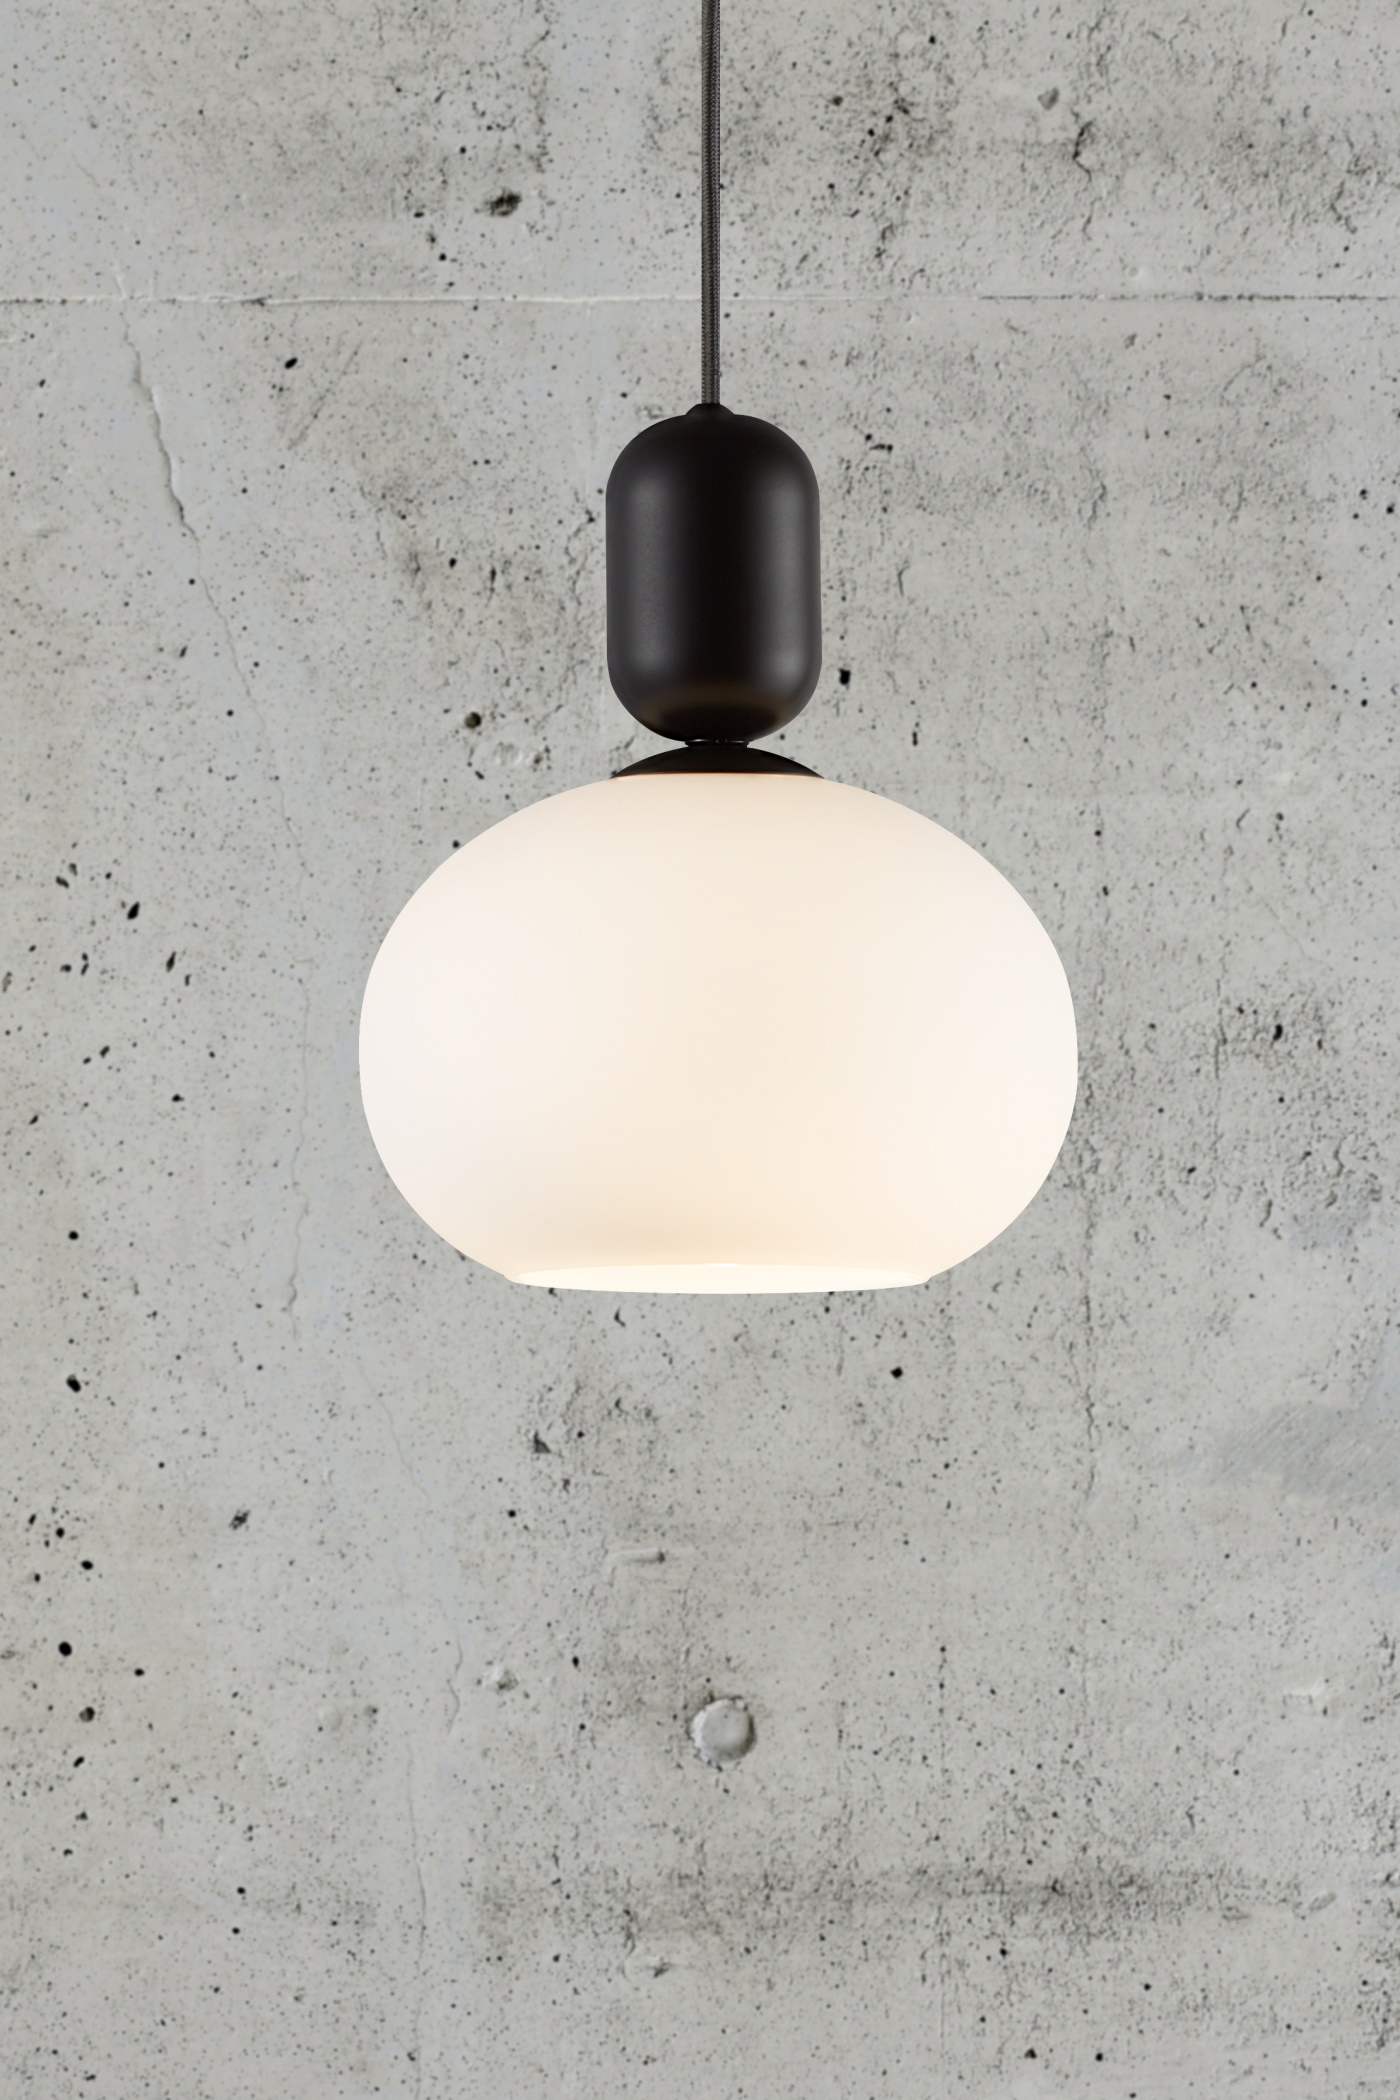   
                        Люстра NORDLUX  (Дания) 12590    
                         в стиле модерн.  
                        Тип источника света: светодиодные led, энергосберегающие, накаливания.                         Форма: шар.                         Цвета плафонов и подвесок: белый.                         Материал: стекло.                          фото 5